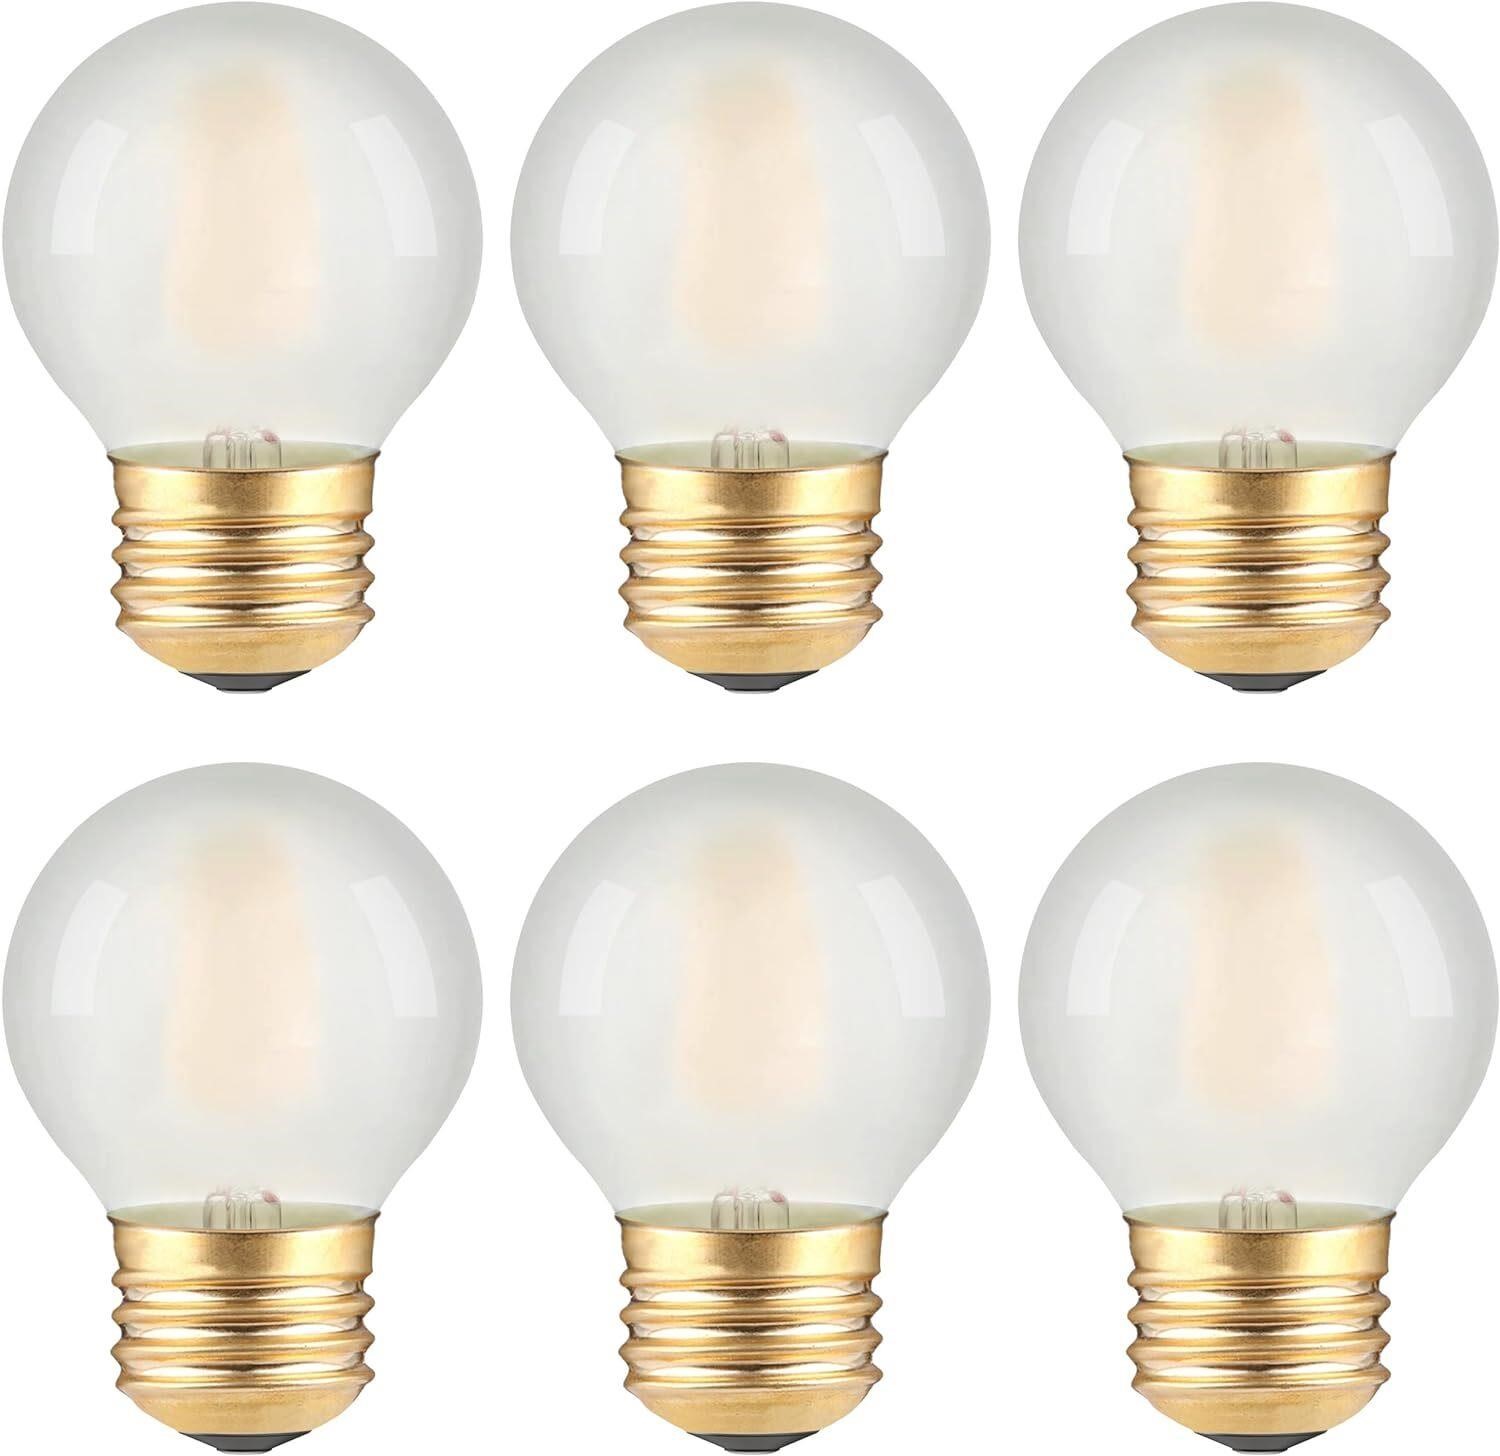 2W A15 LED Ceiling Bulb  E26 2700K  6ct